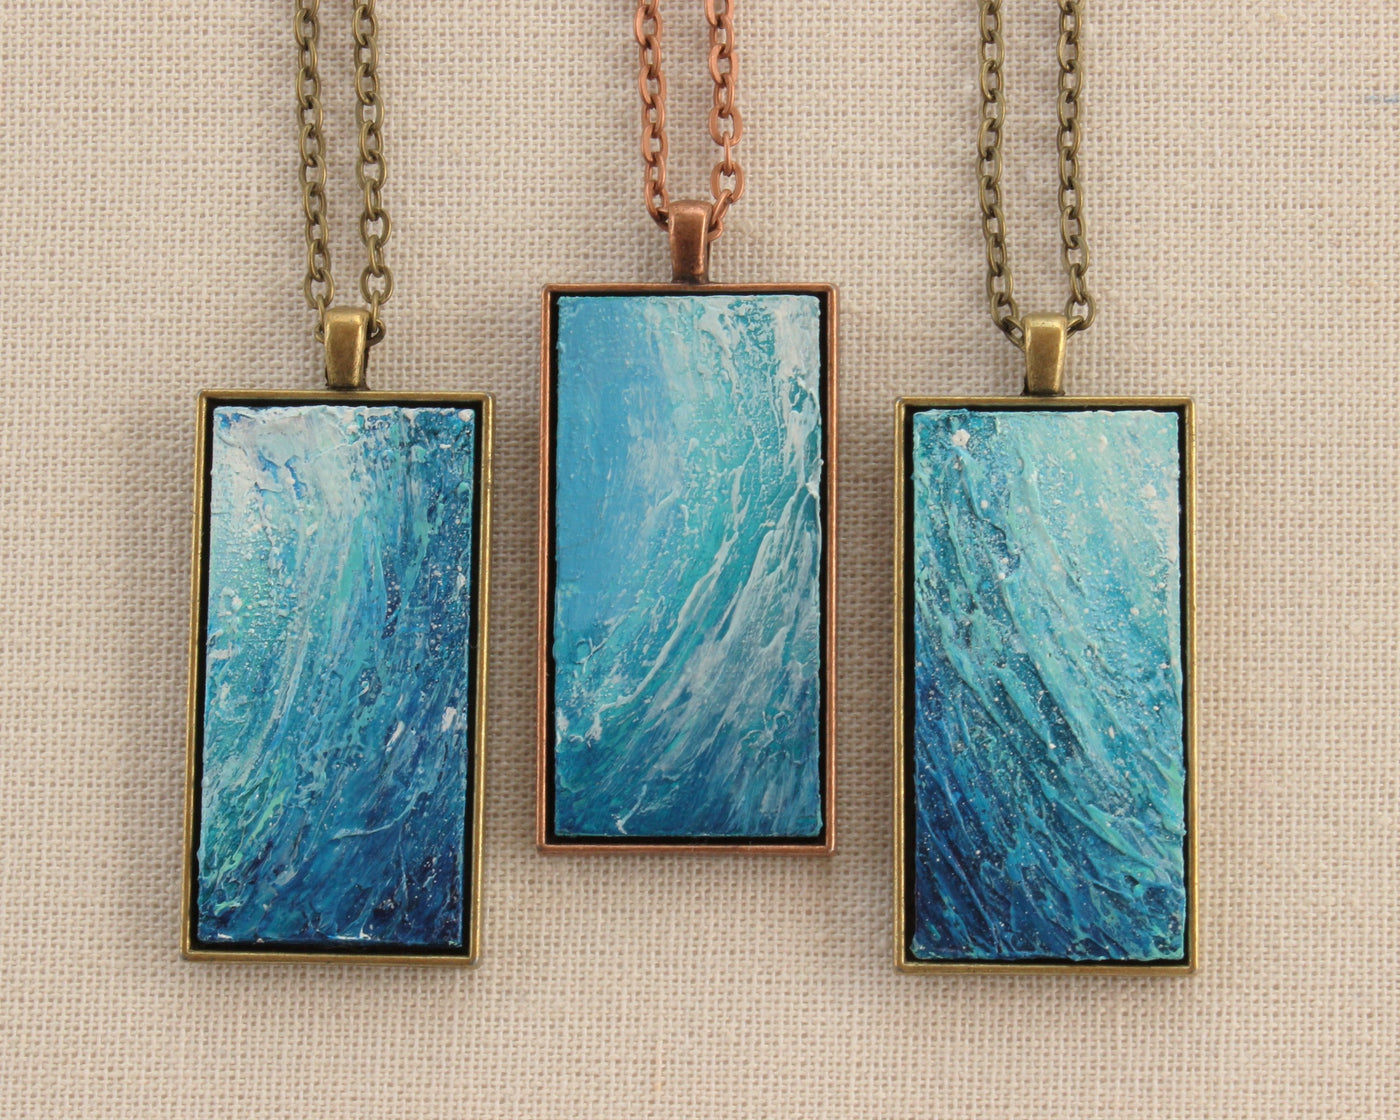 Ocean Wave Necklace - Blue and copper Pendant